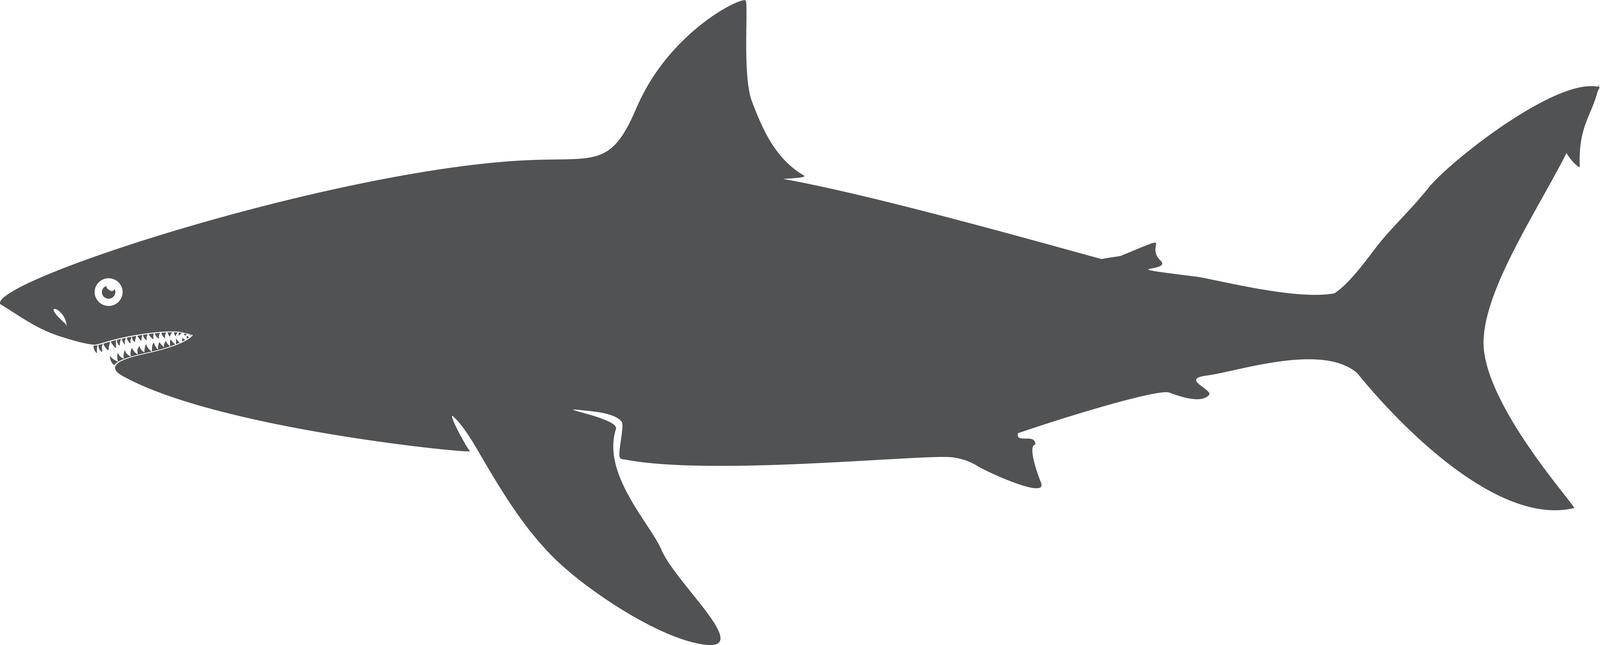 Shark black silhouette. Dangerous ocean predator icon by ONYXprj